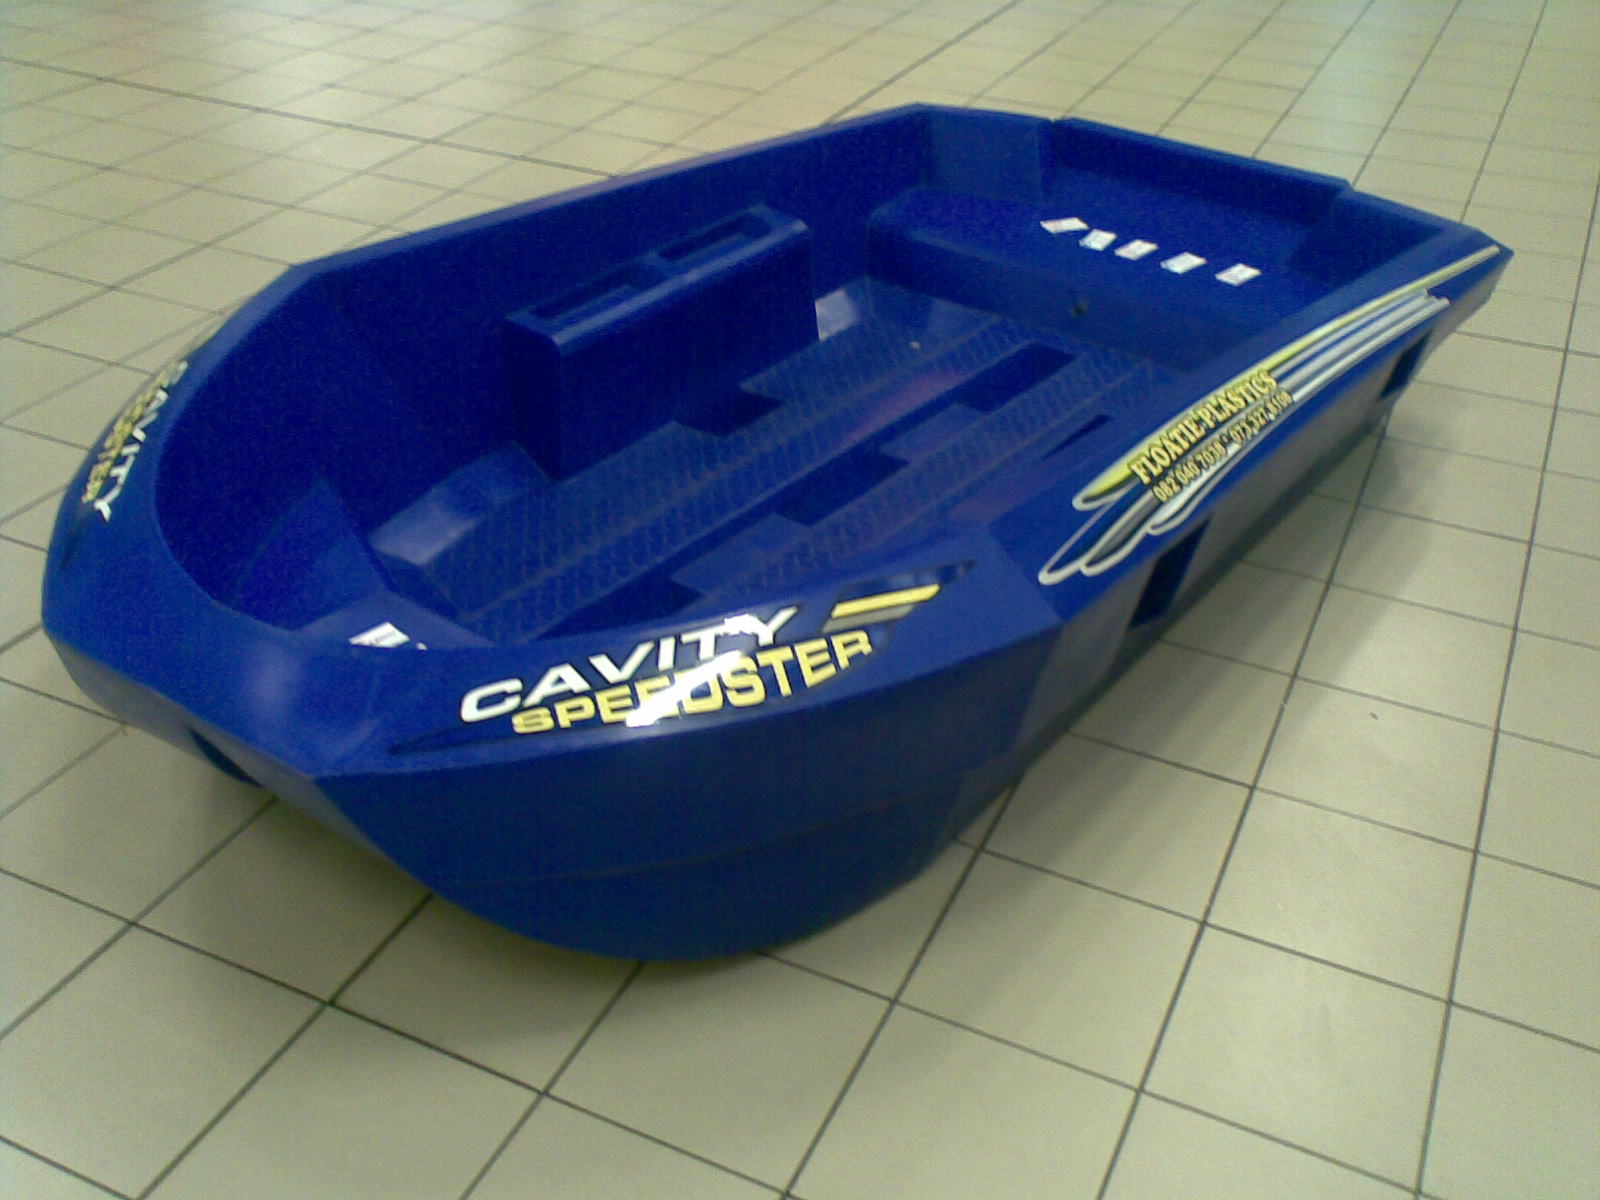 Cavity Seedster Plastic Fishing Boats: HDPE Plastic Boats